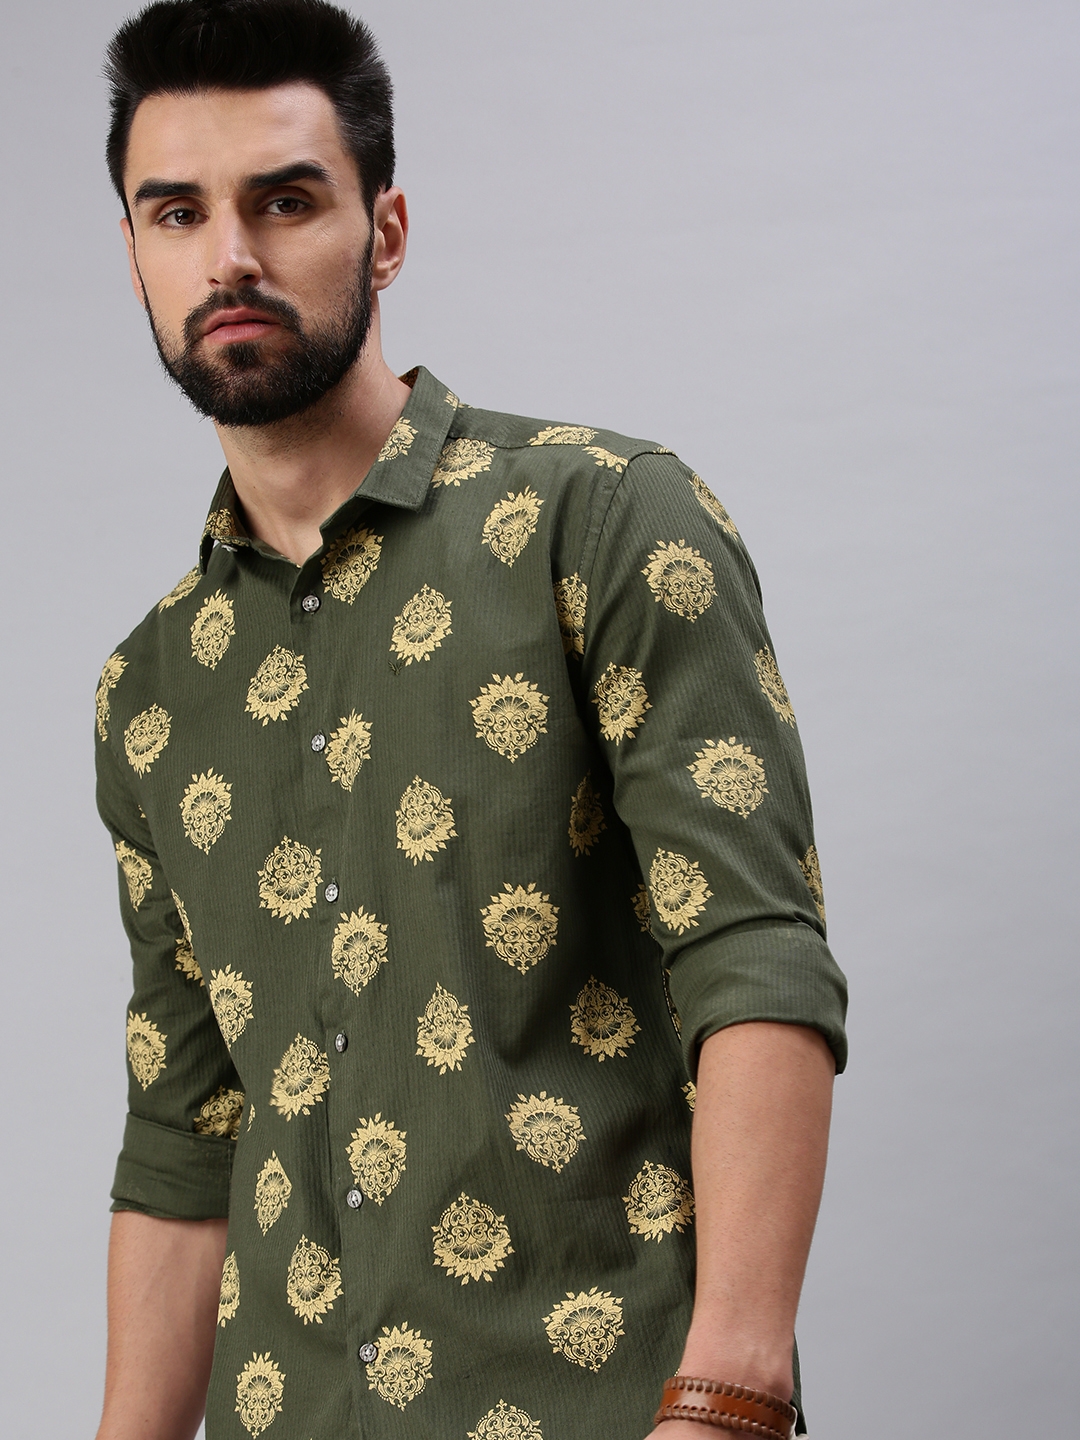 Men's Green Cotton Printed Casual Shirts